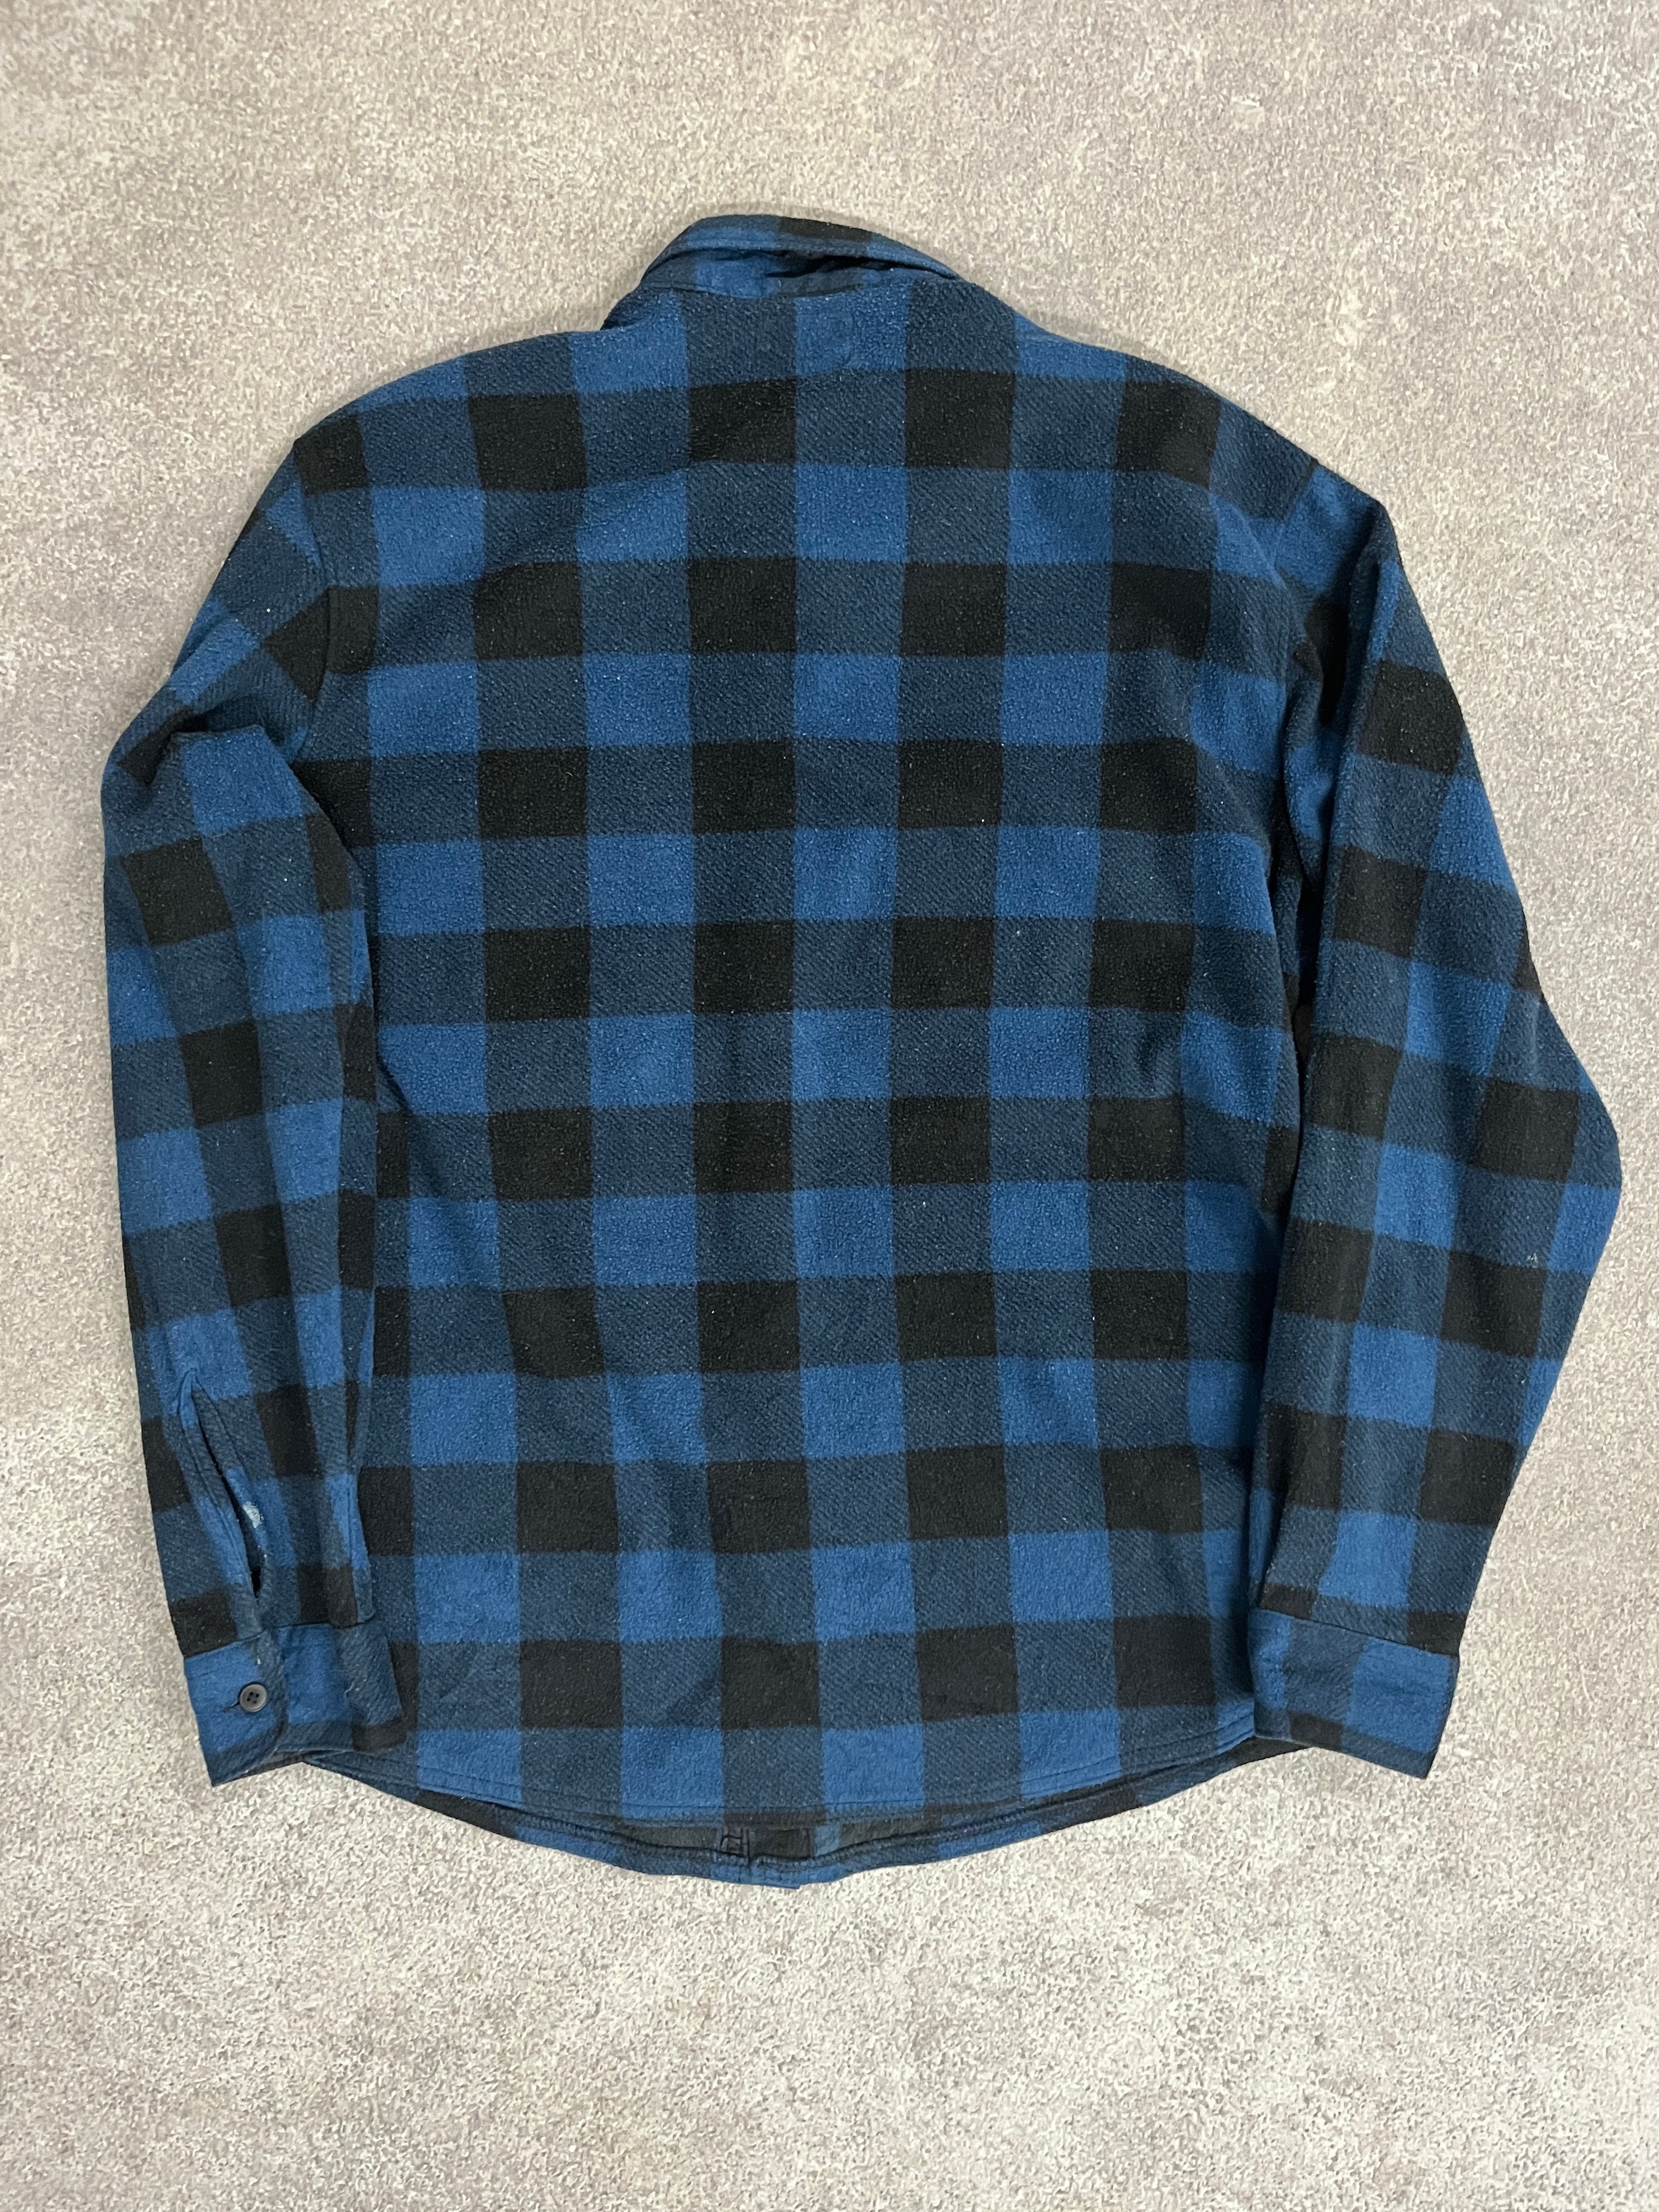 Vintage Wrangler Fleece Shirt Blue // Small - RHAGHOUSE VINTAGE